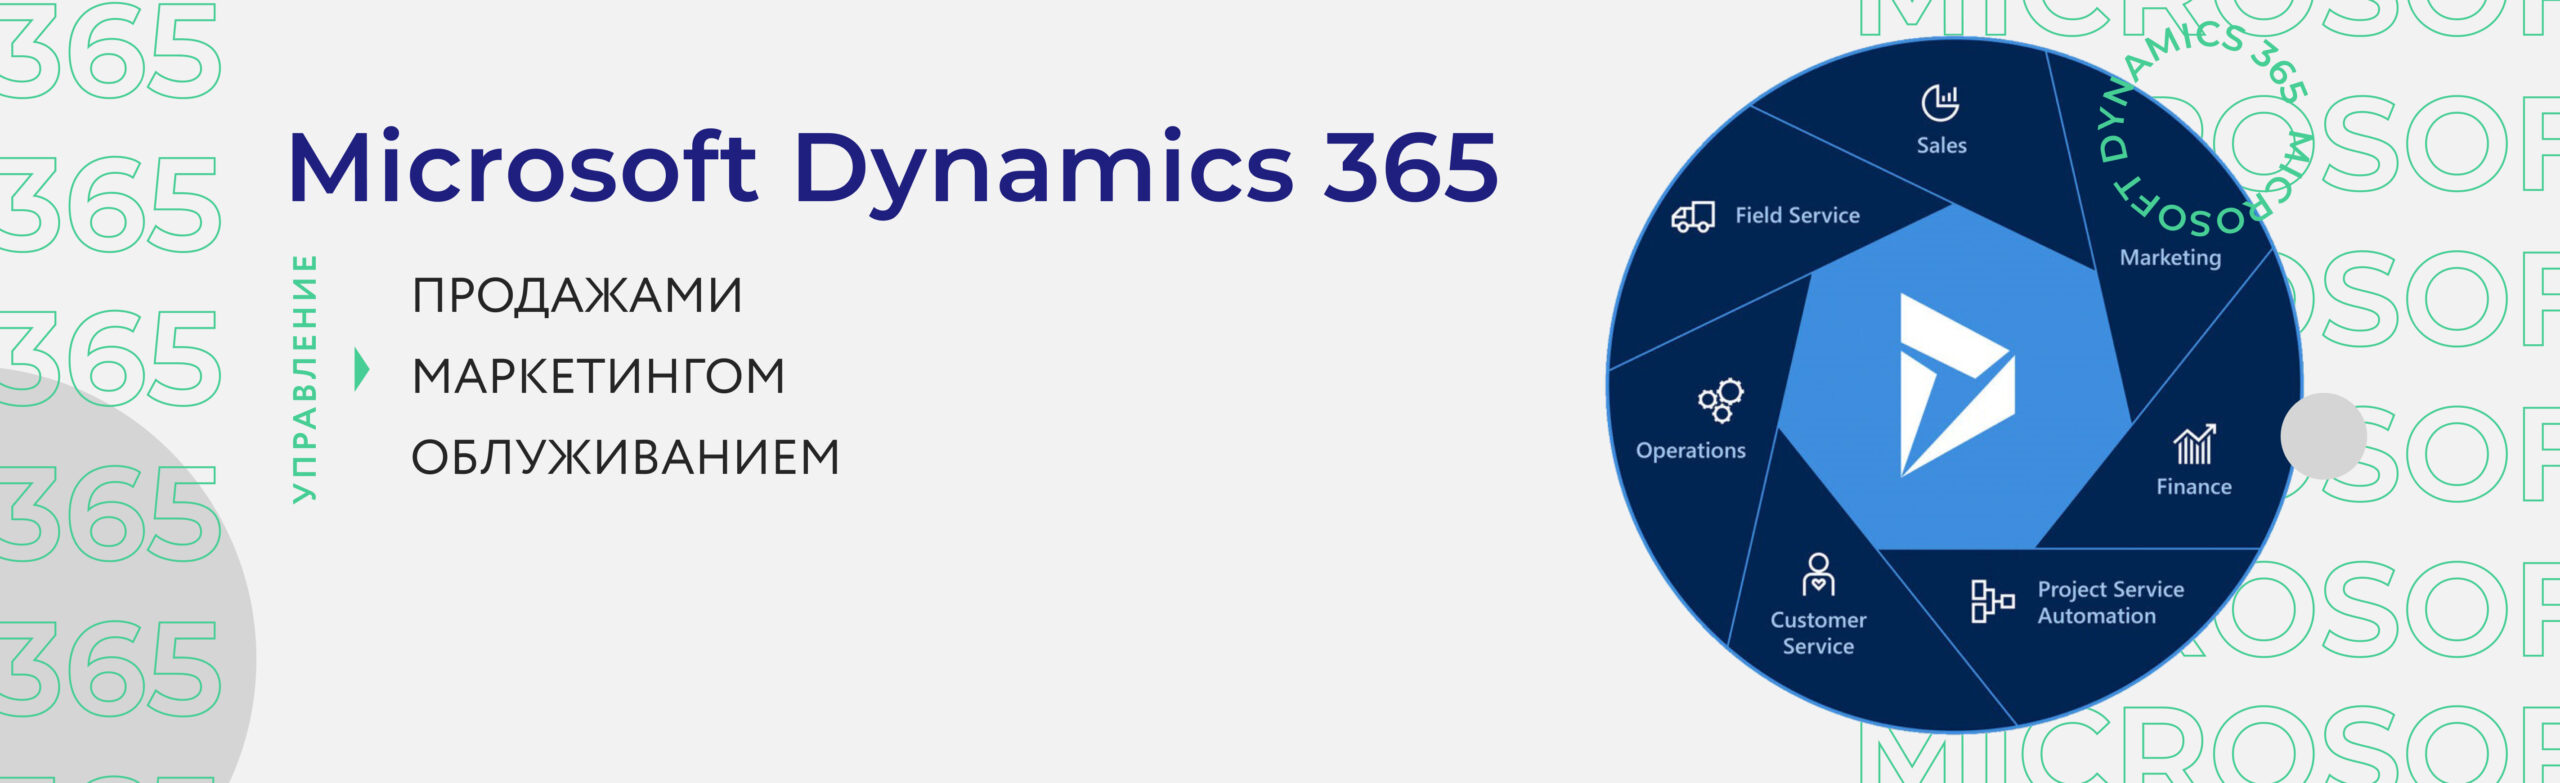 баннер Microsoft Dynamics 365